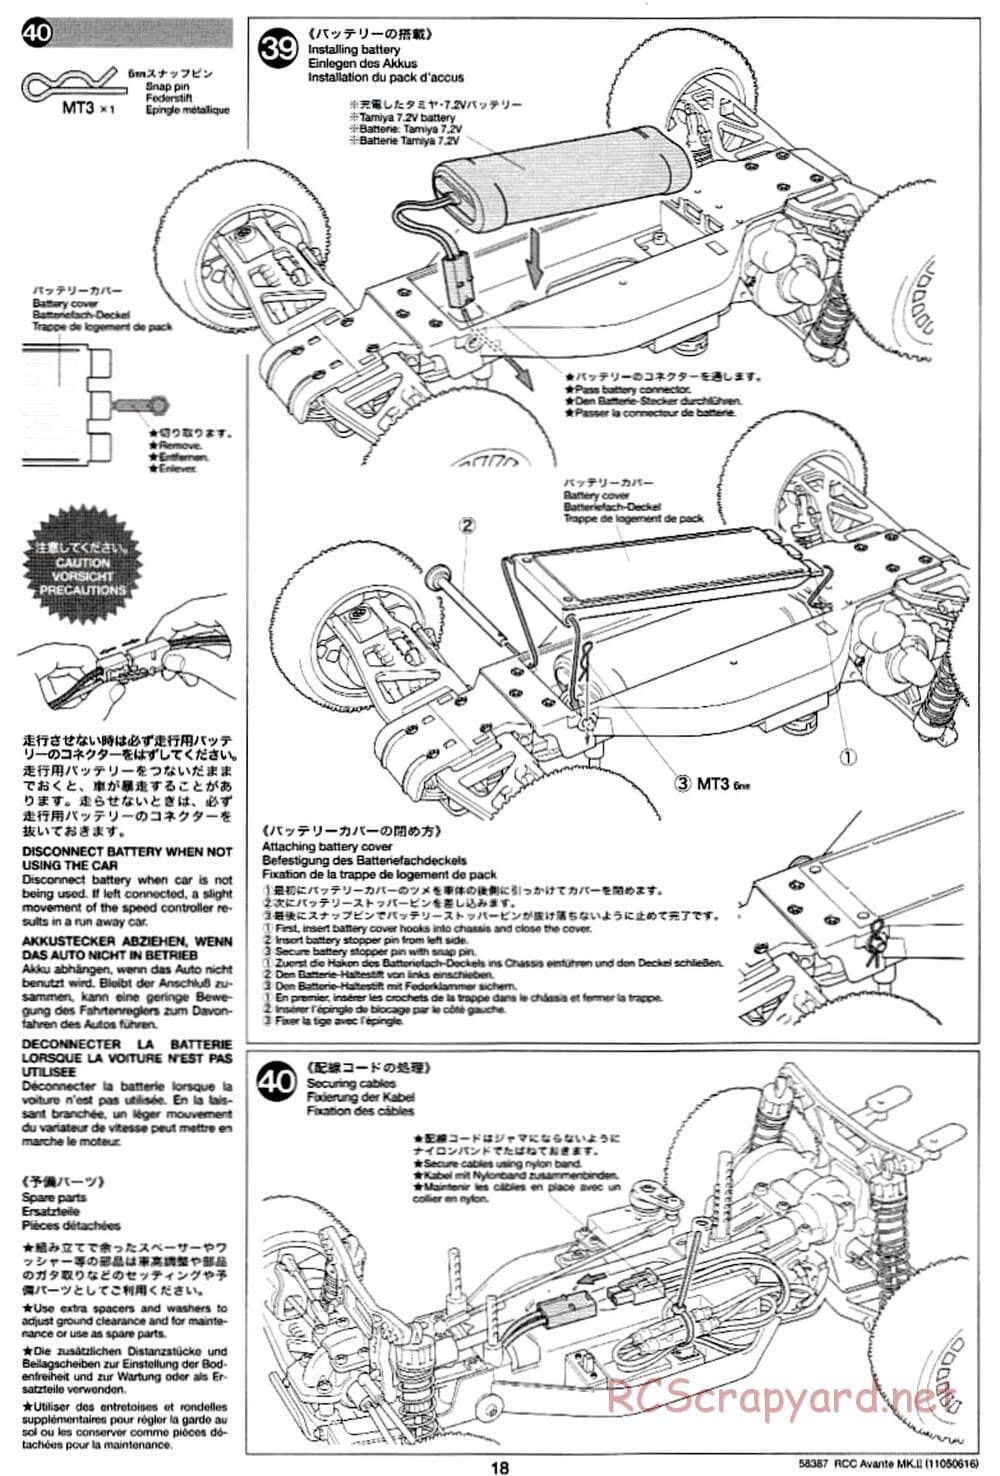 Tamiya - Avante Mk.II Chassis - Manual - Page 18